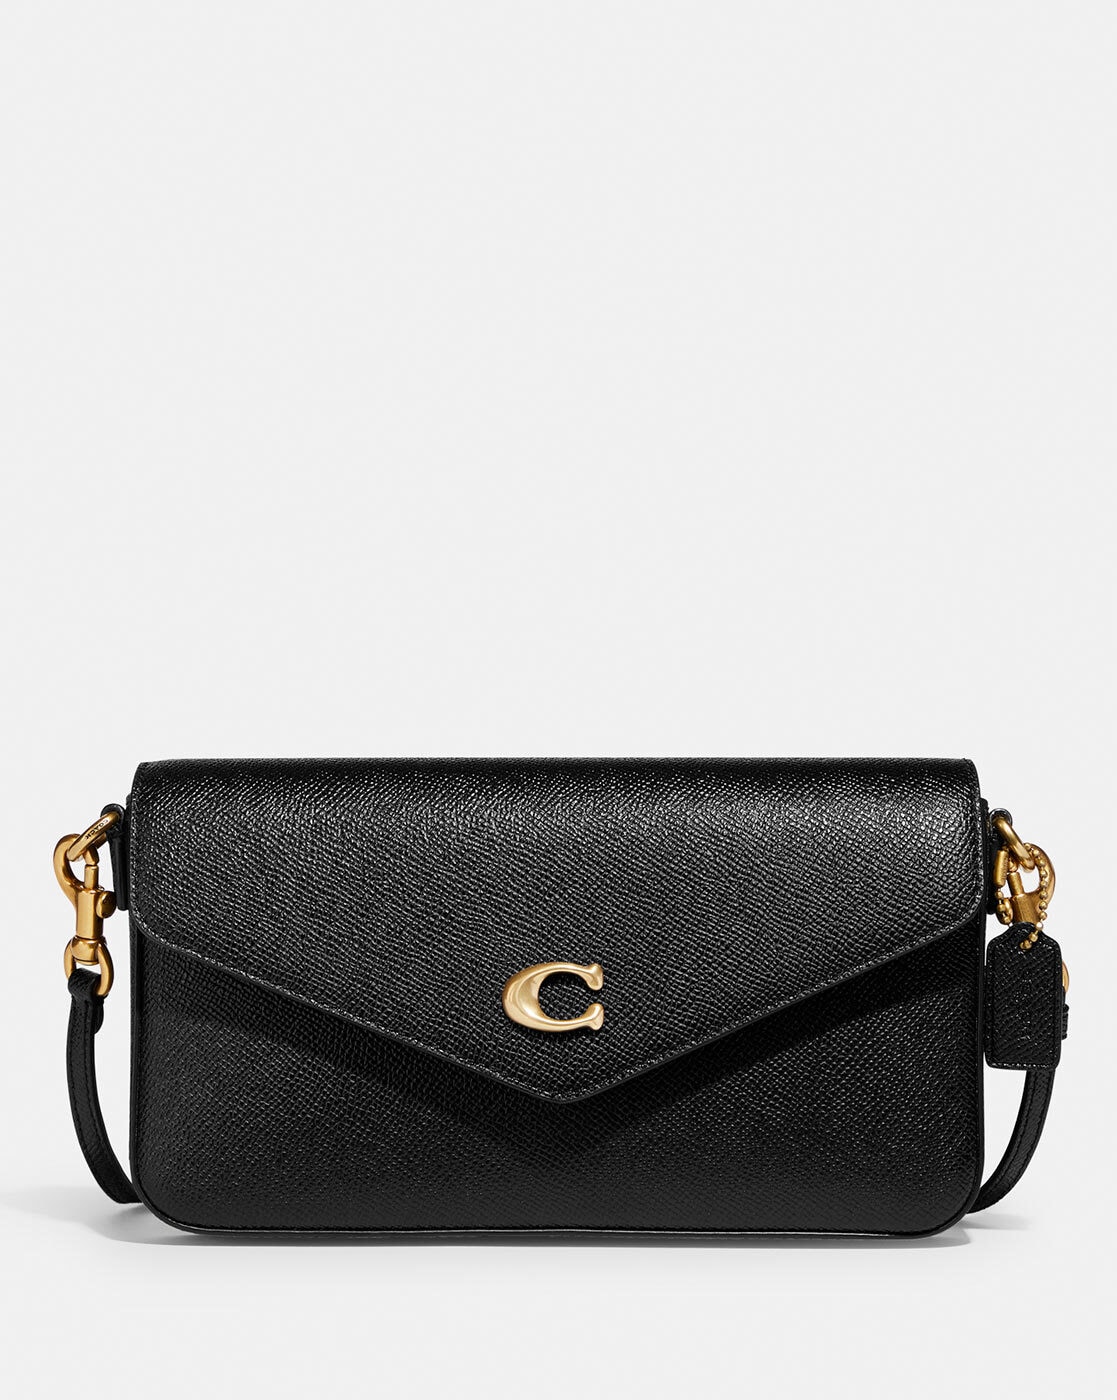 Buy Black Handbags for Women by Michael Kors Online  Ajiocom